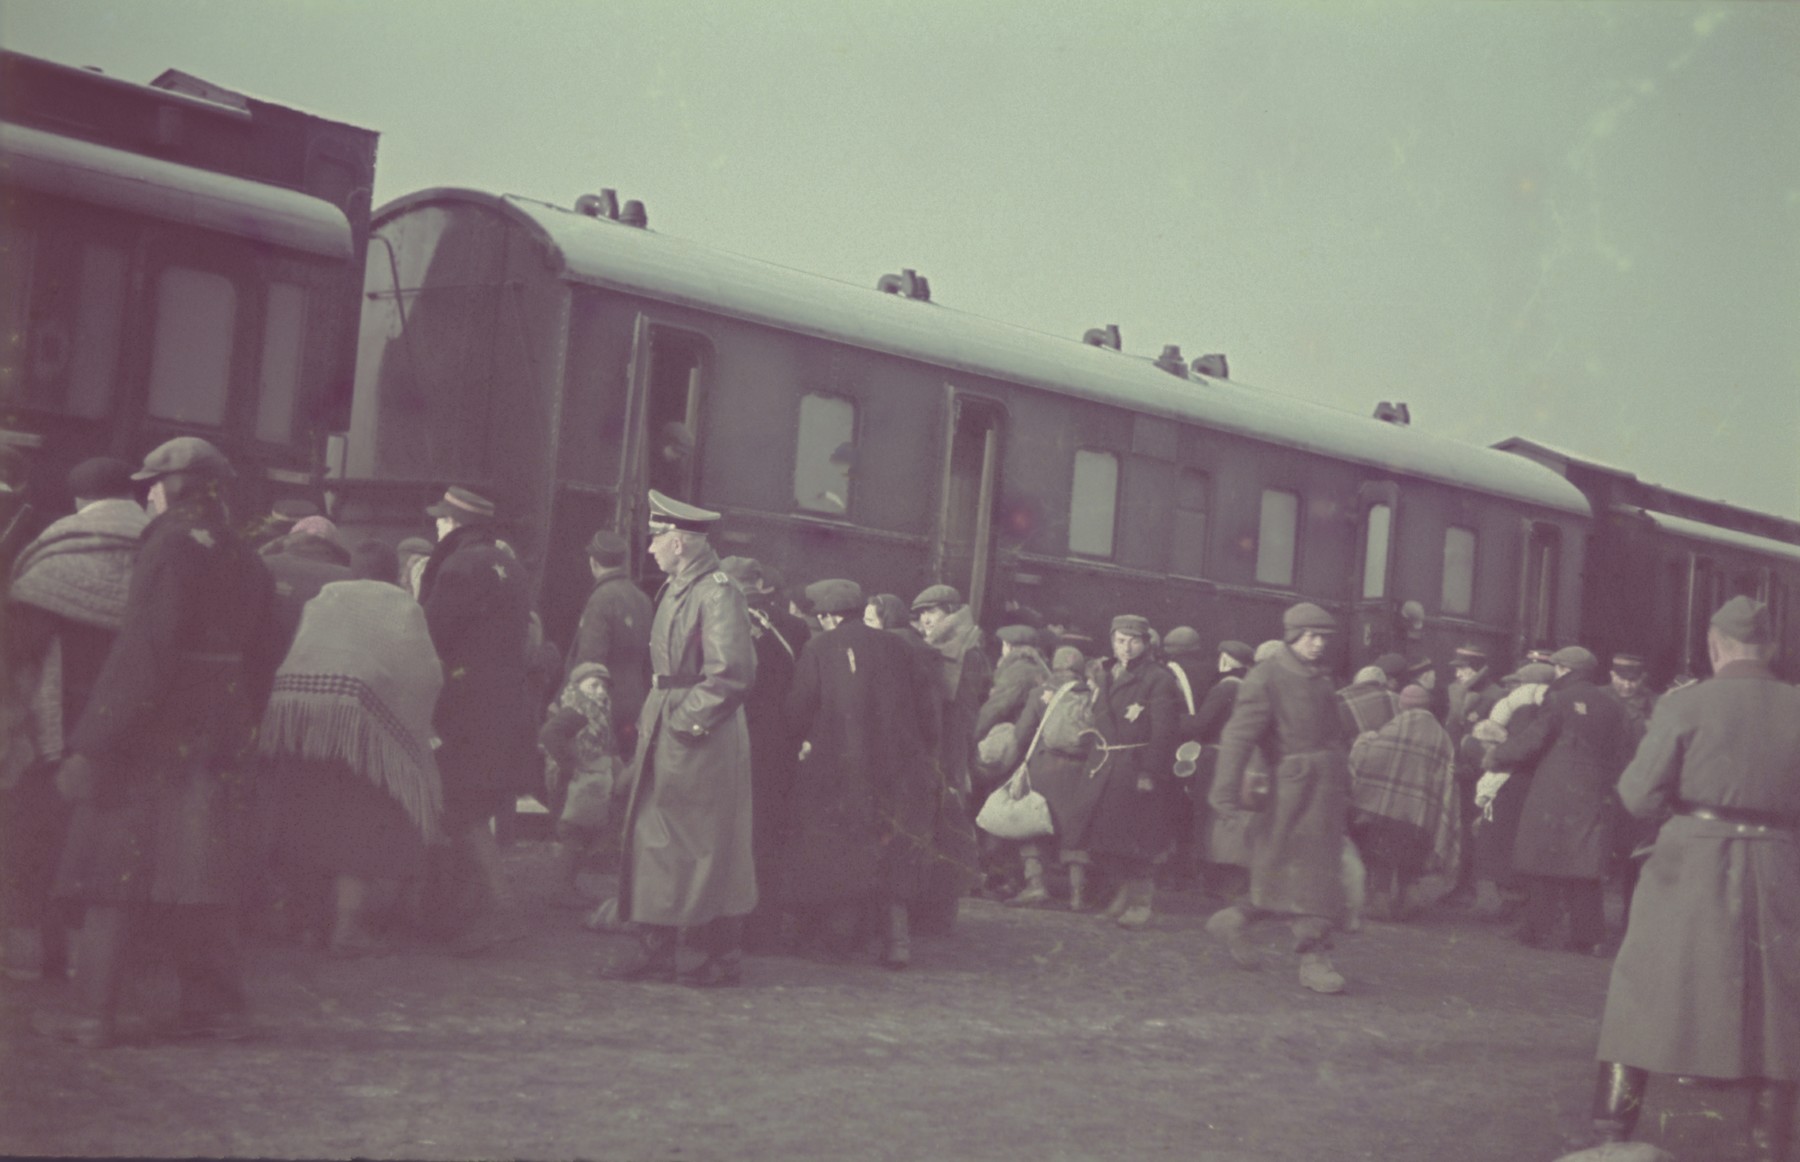 Jews board a passenger train during a deportation action in the Lodz ghetto.

Original German caption: "Judenaussiedlung" (Jewish resettlement), #153.